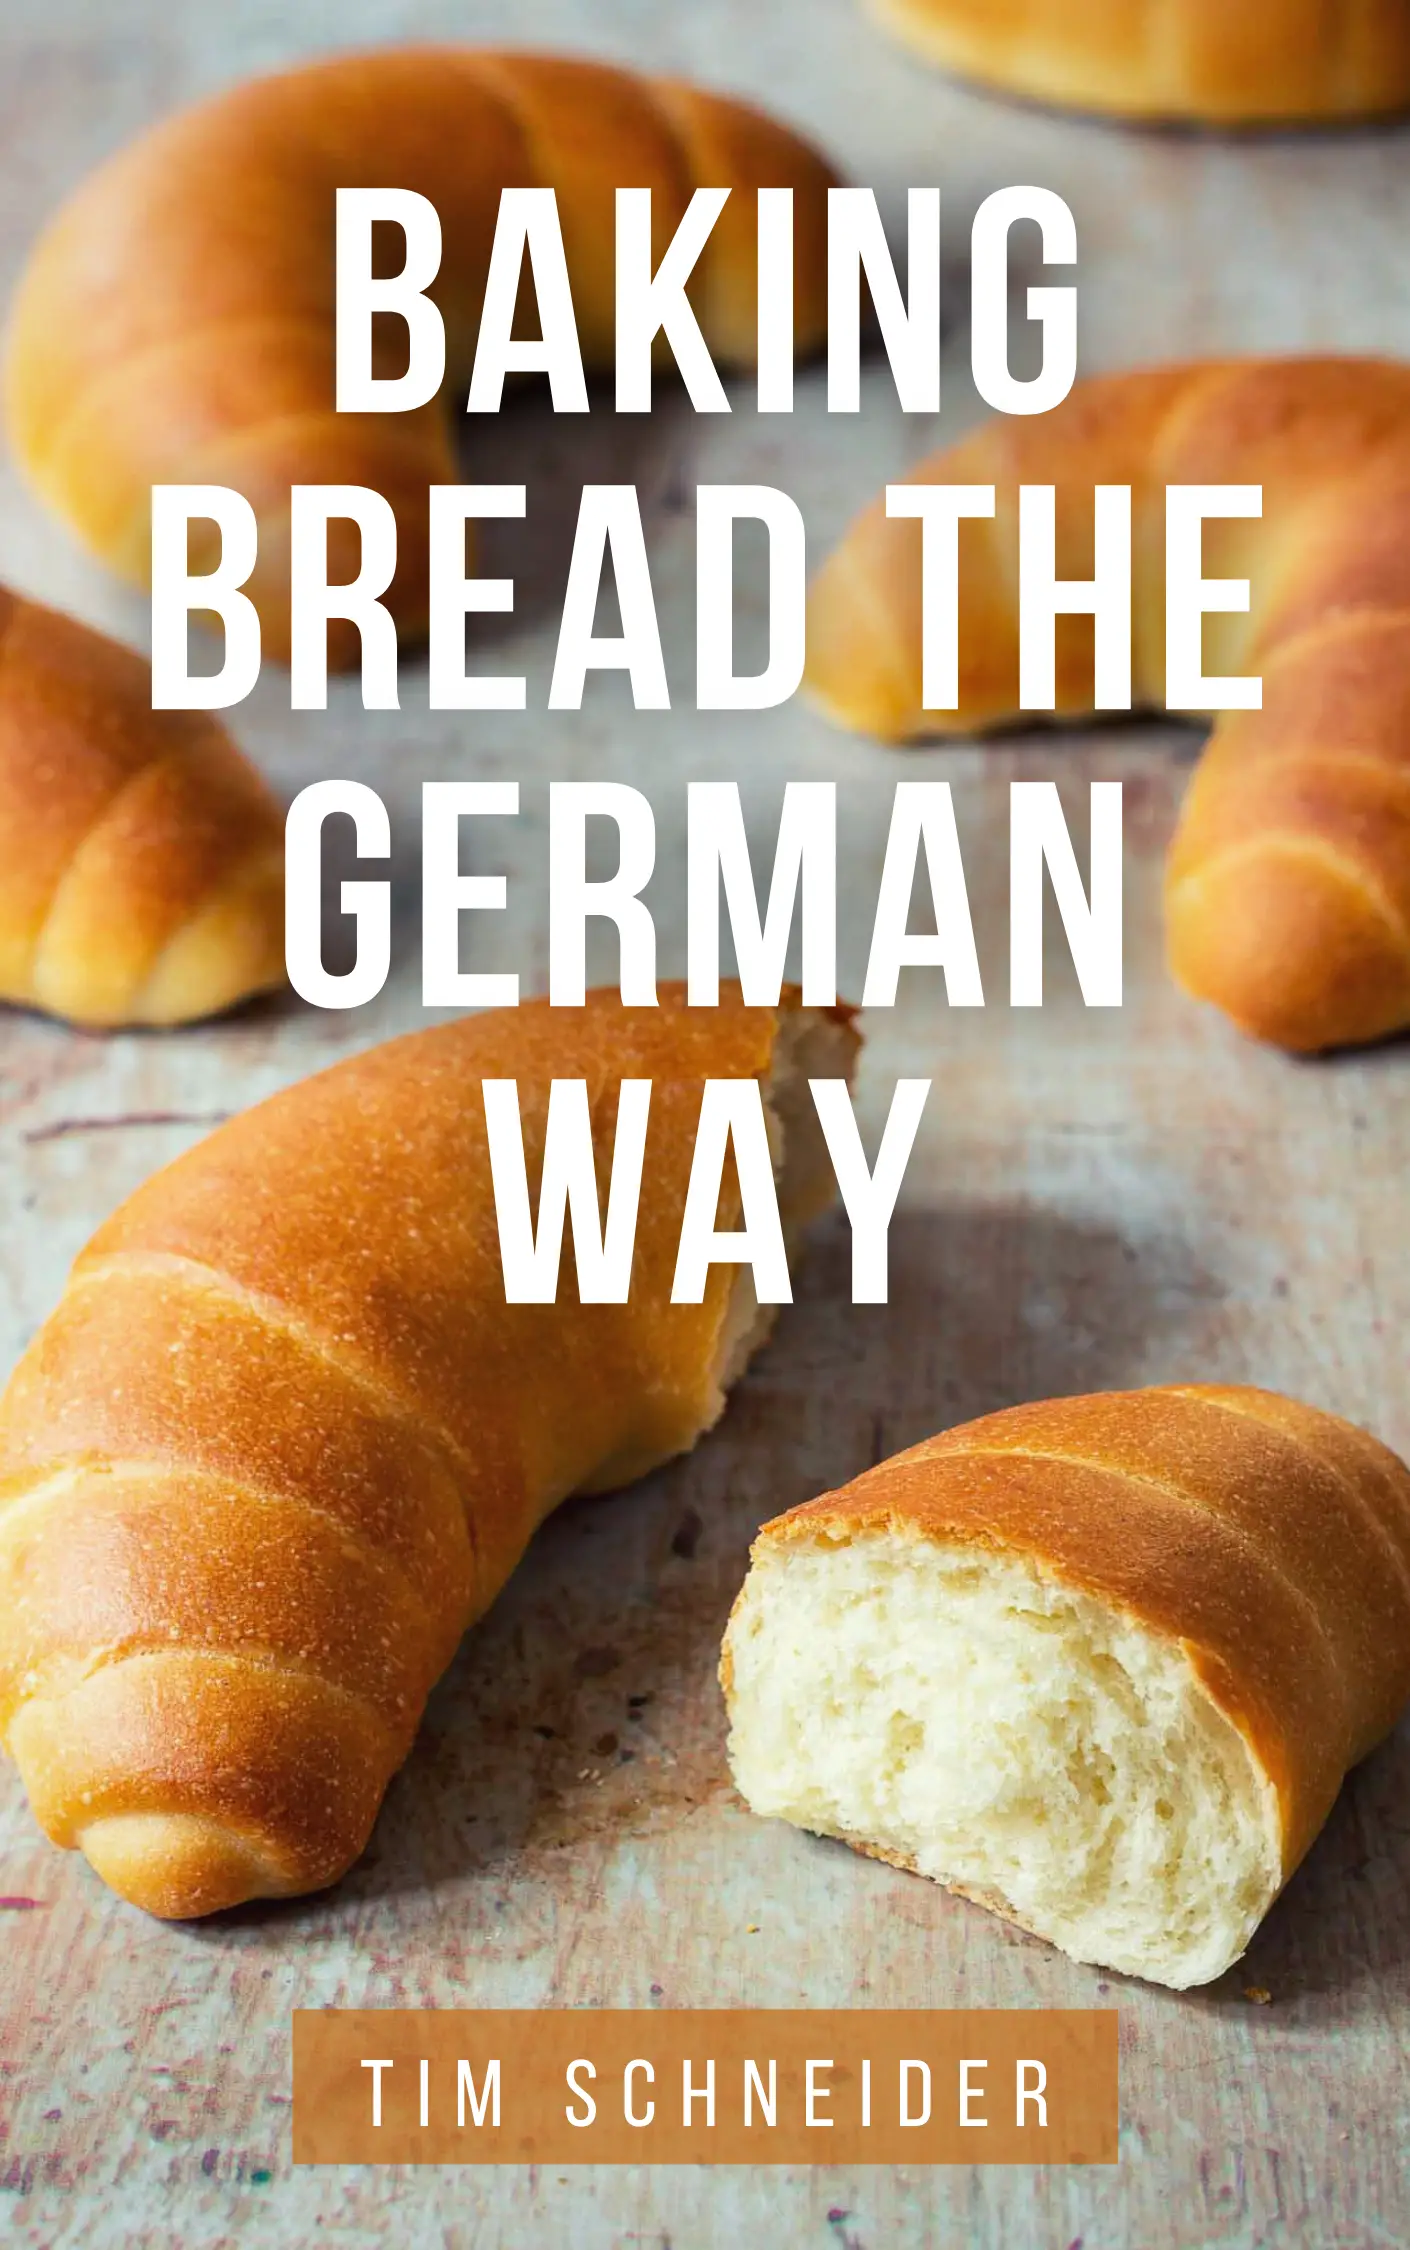 Baking bread the German way